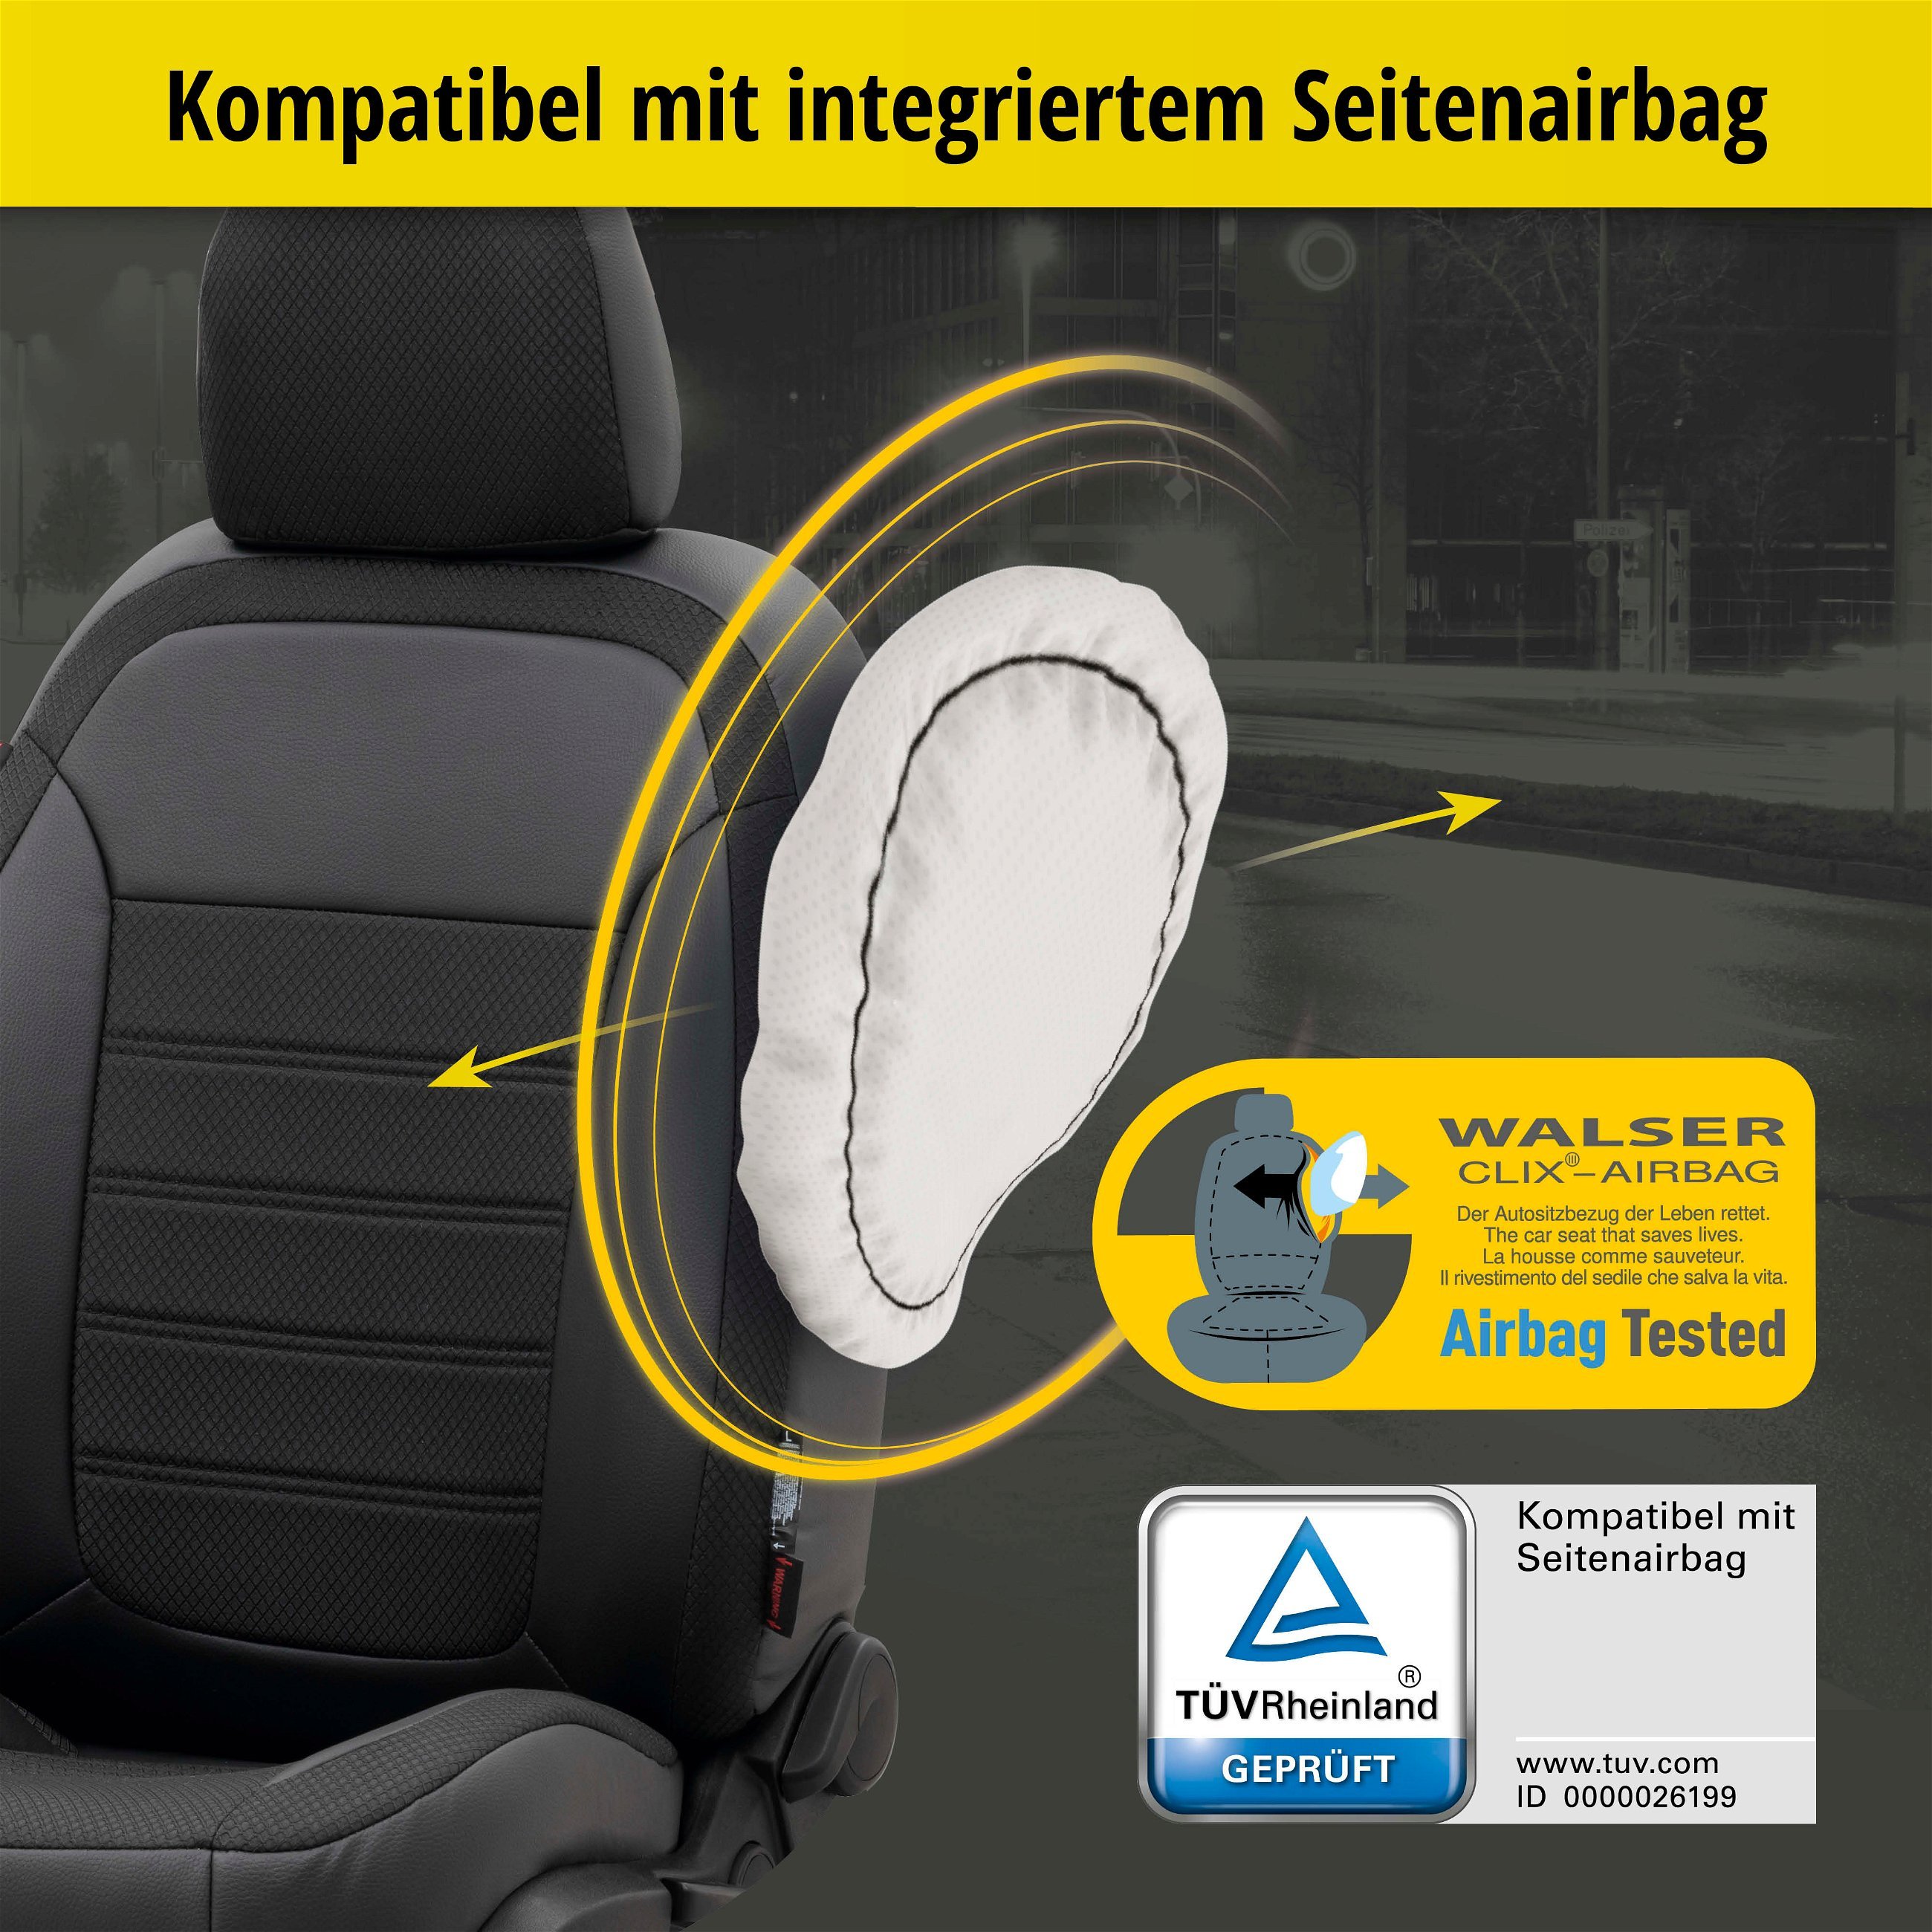 Passform Sitzbezug Aversa für Opel Corsa E (X15) 09/2014-Heute, 2 Einzelsitzbezüge für Normalsitze